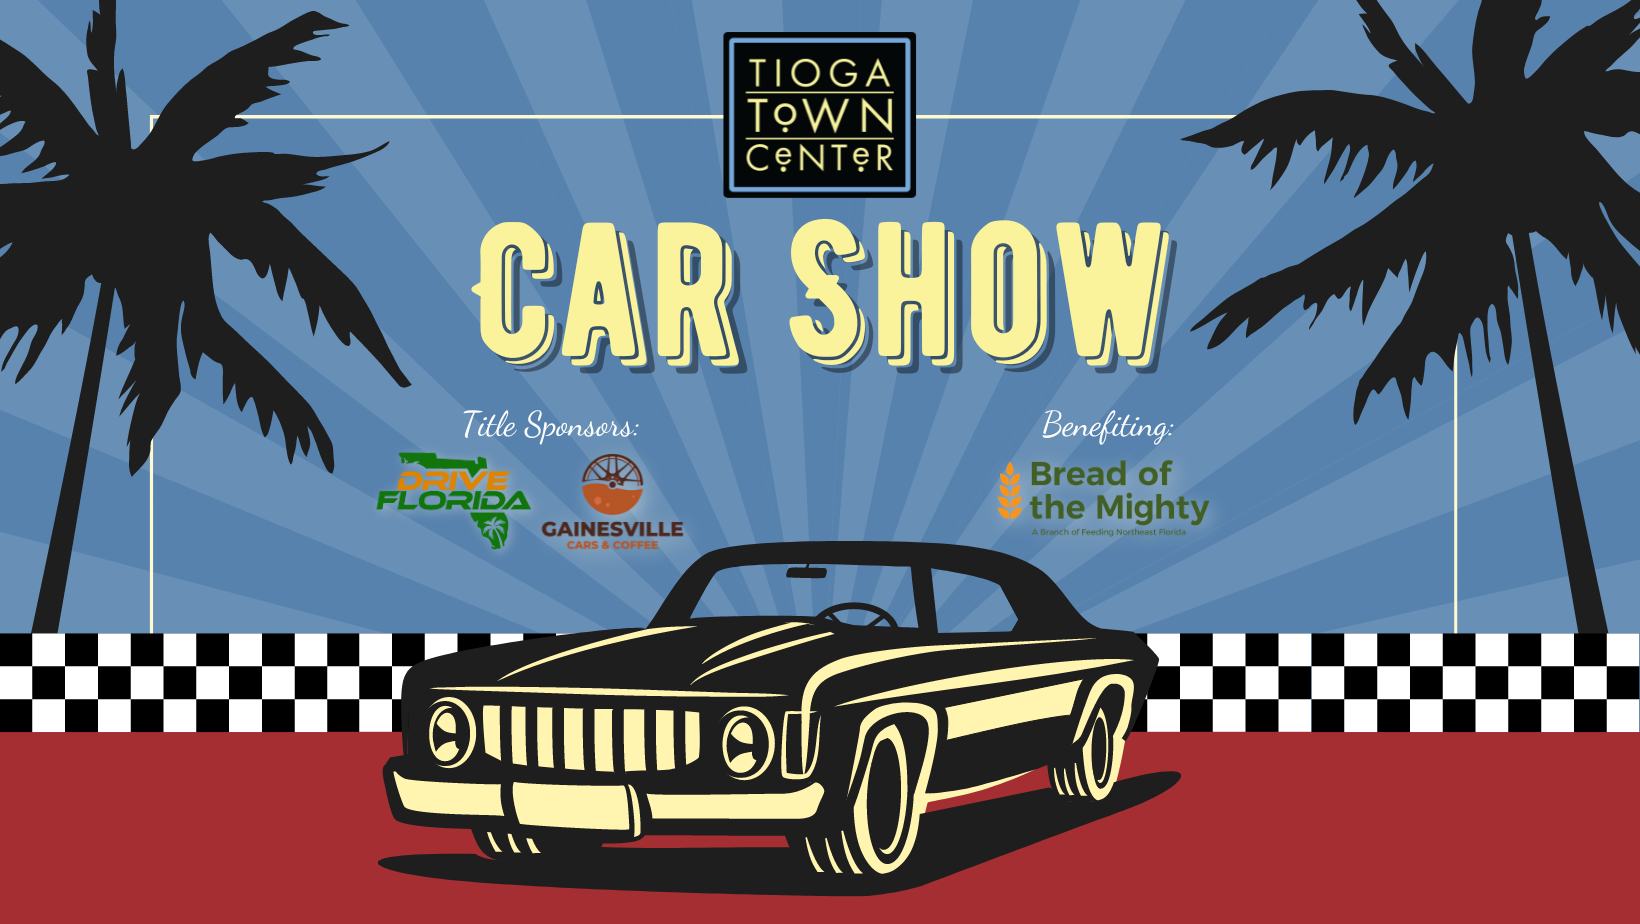 Tioga Town Center Car Show